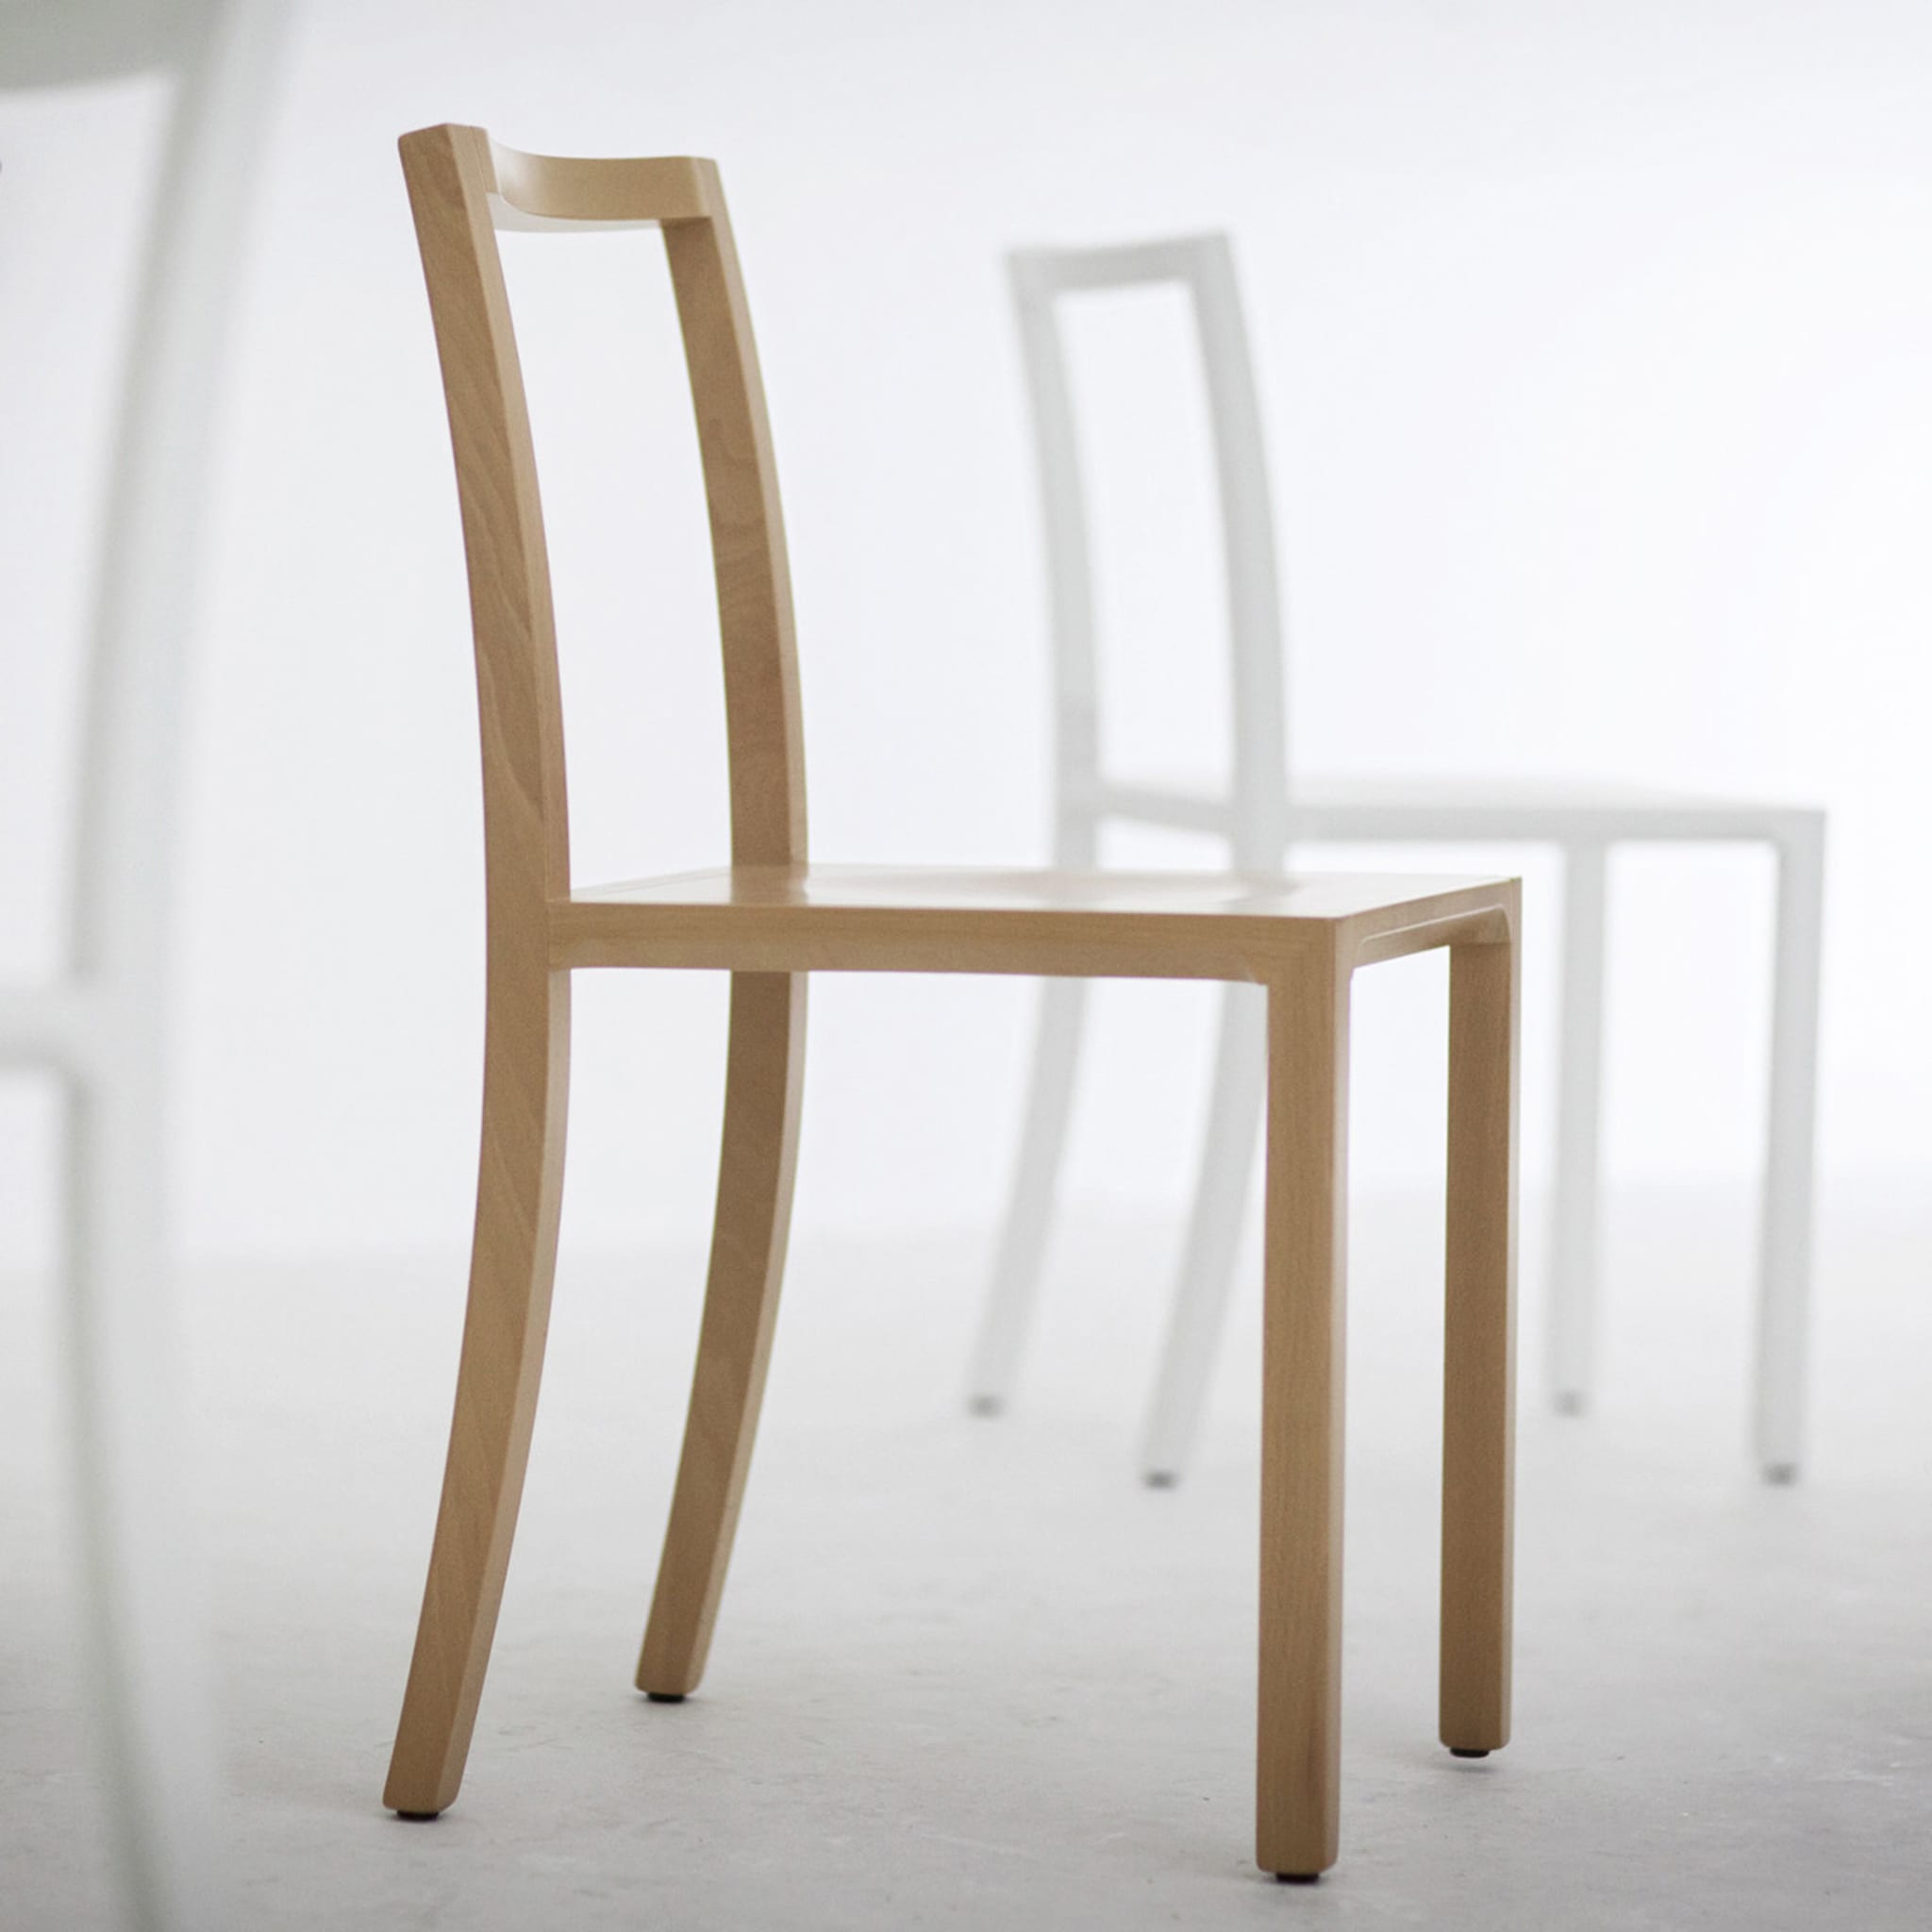 Framework Set of 2 White Chairs by Steffen Kehrle - Alternative view 3